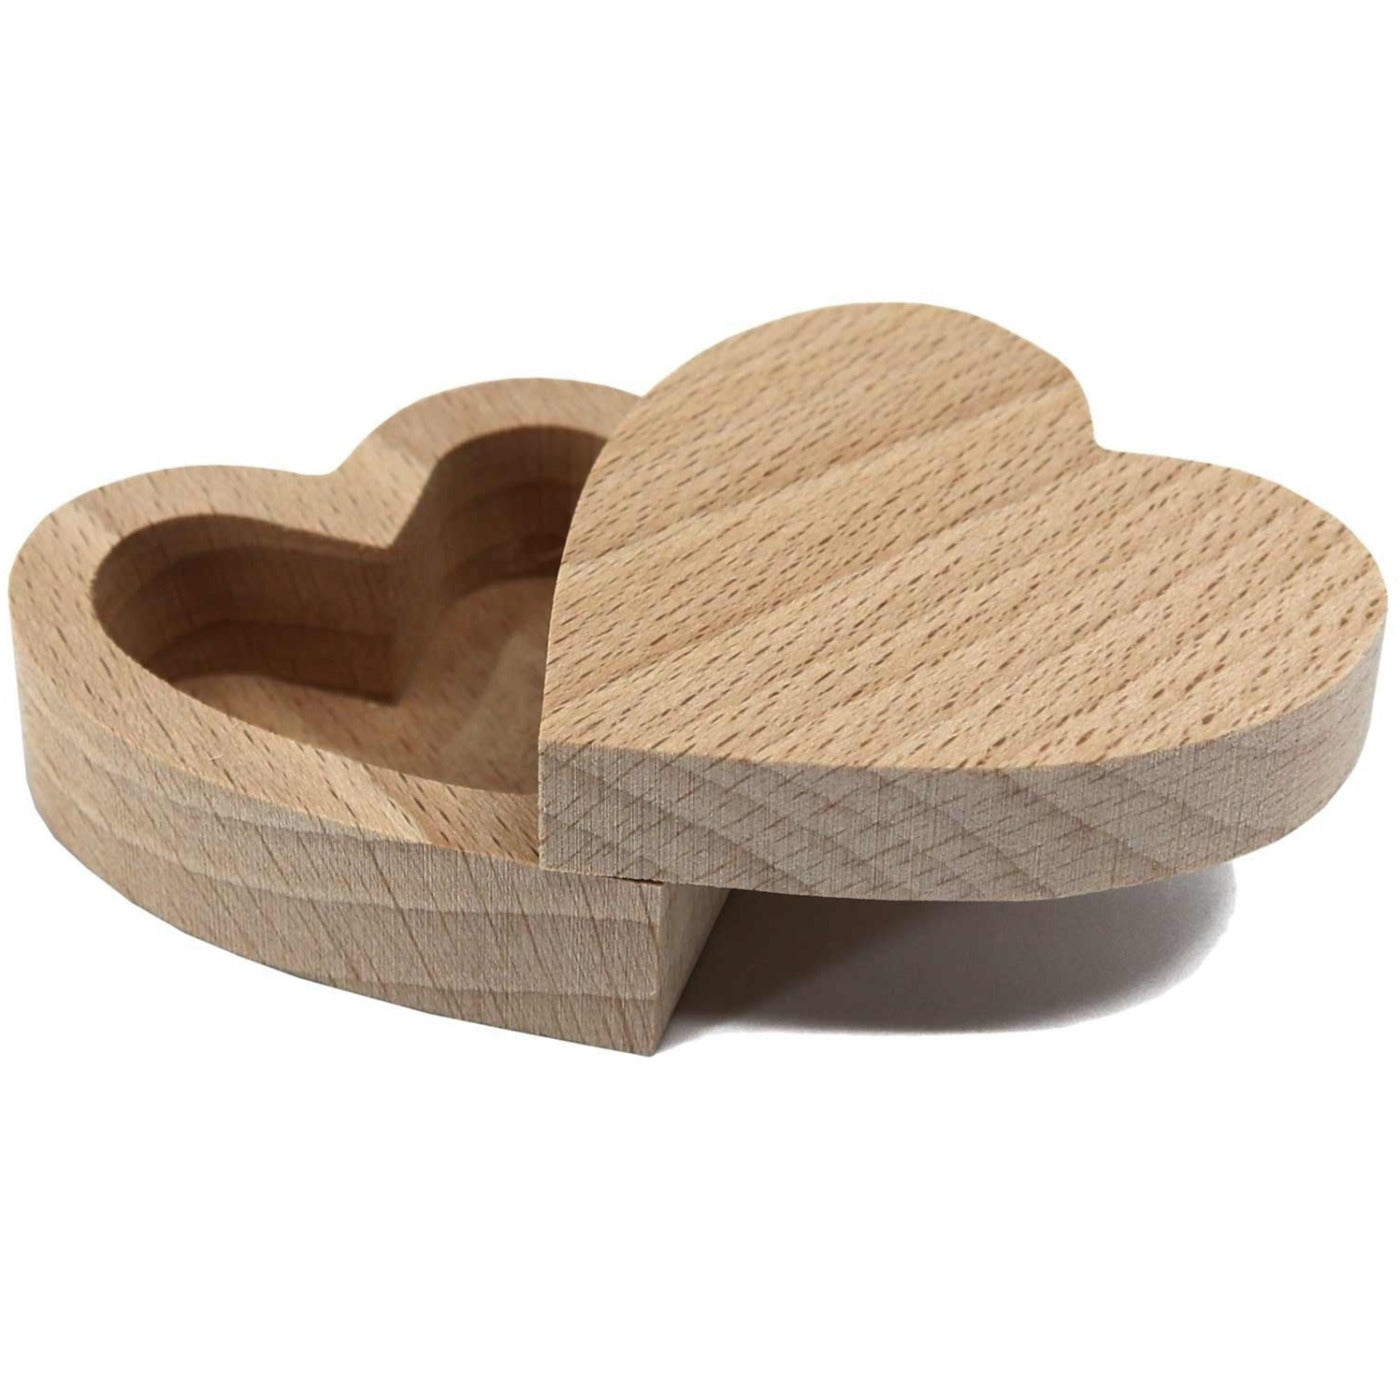 Personalised Wedding Ring Box - Engraved Wedding Ring Box Rustic Heart Shaped Wooden Ring Box - Wedding Day, Bride & Groom